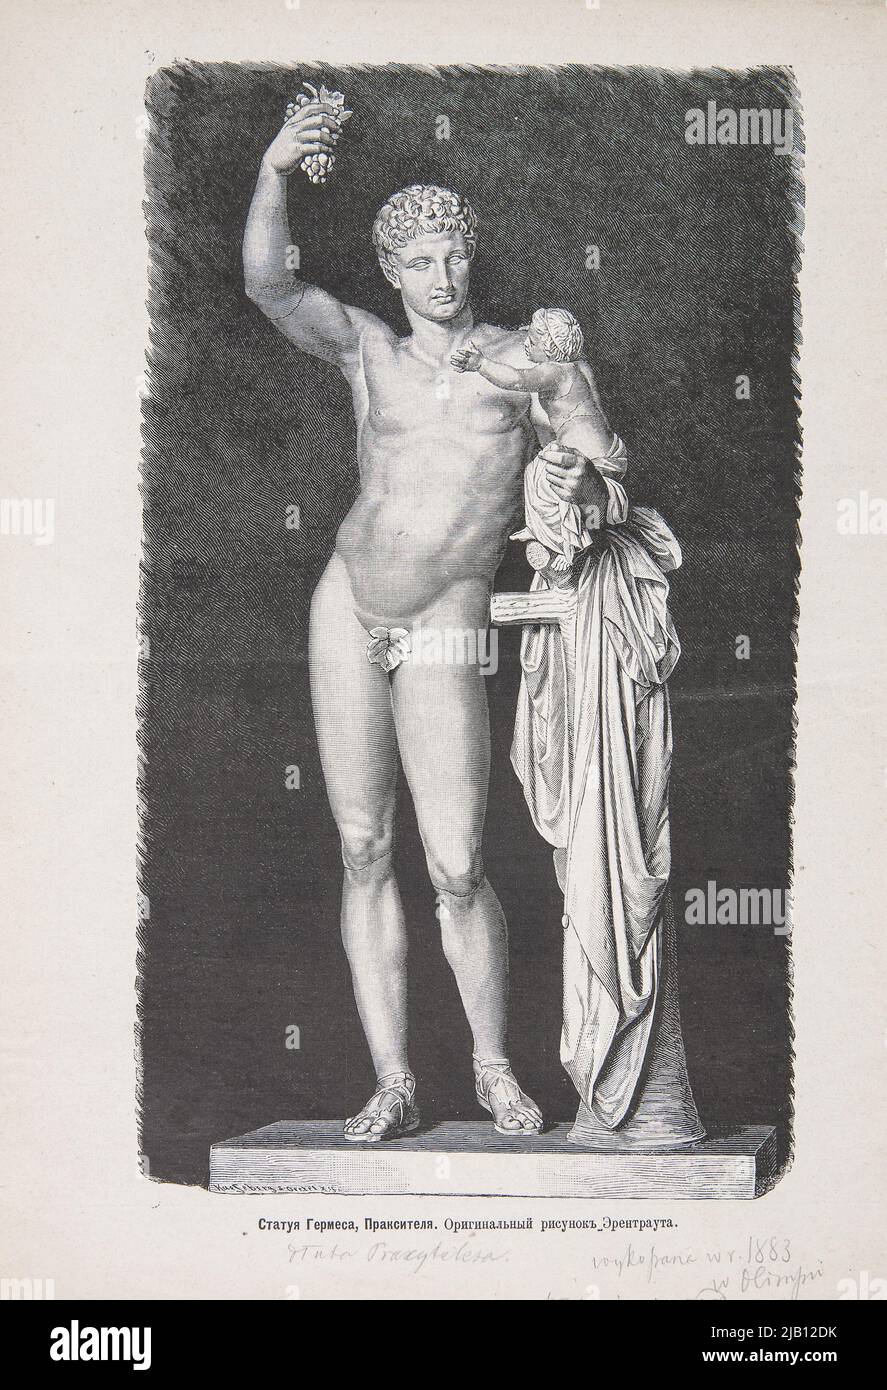 La statua di Hermes secondo la scultura di Praksyteles è stata disegnata da Julius Ehrentraut . Affilatura dalla rivista russa Newwa, 1883, No. 23, p. 364 Käseberg, Hugo (1847 1893), Oertel, Kaspar Erhardt (1840 18 ..), PracticeTeles (IV W.), E.), Ehrentraut, Julius (1841 1923) Foto Stock